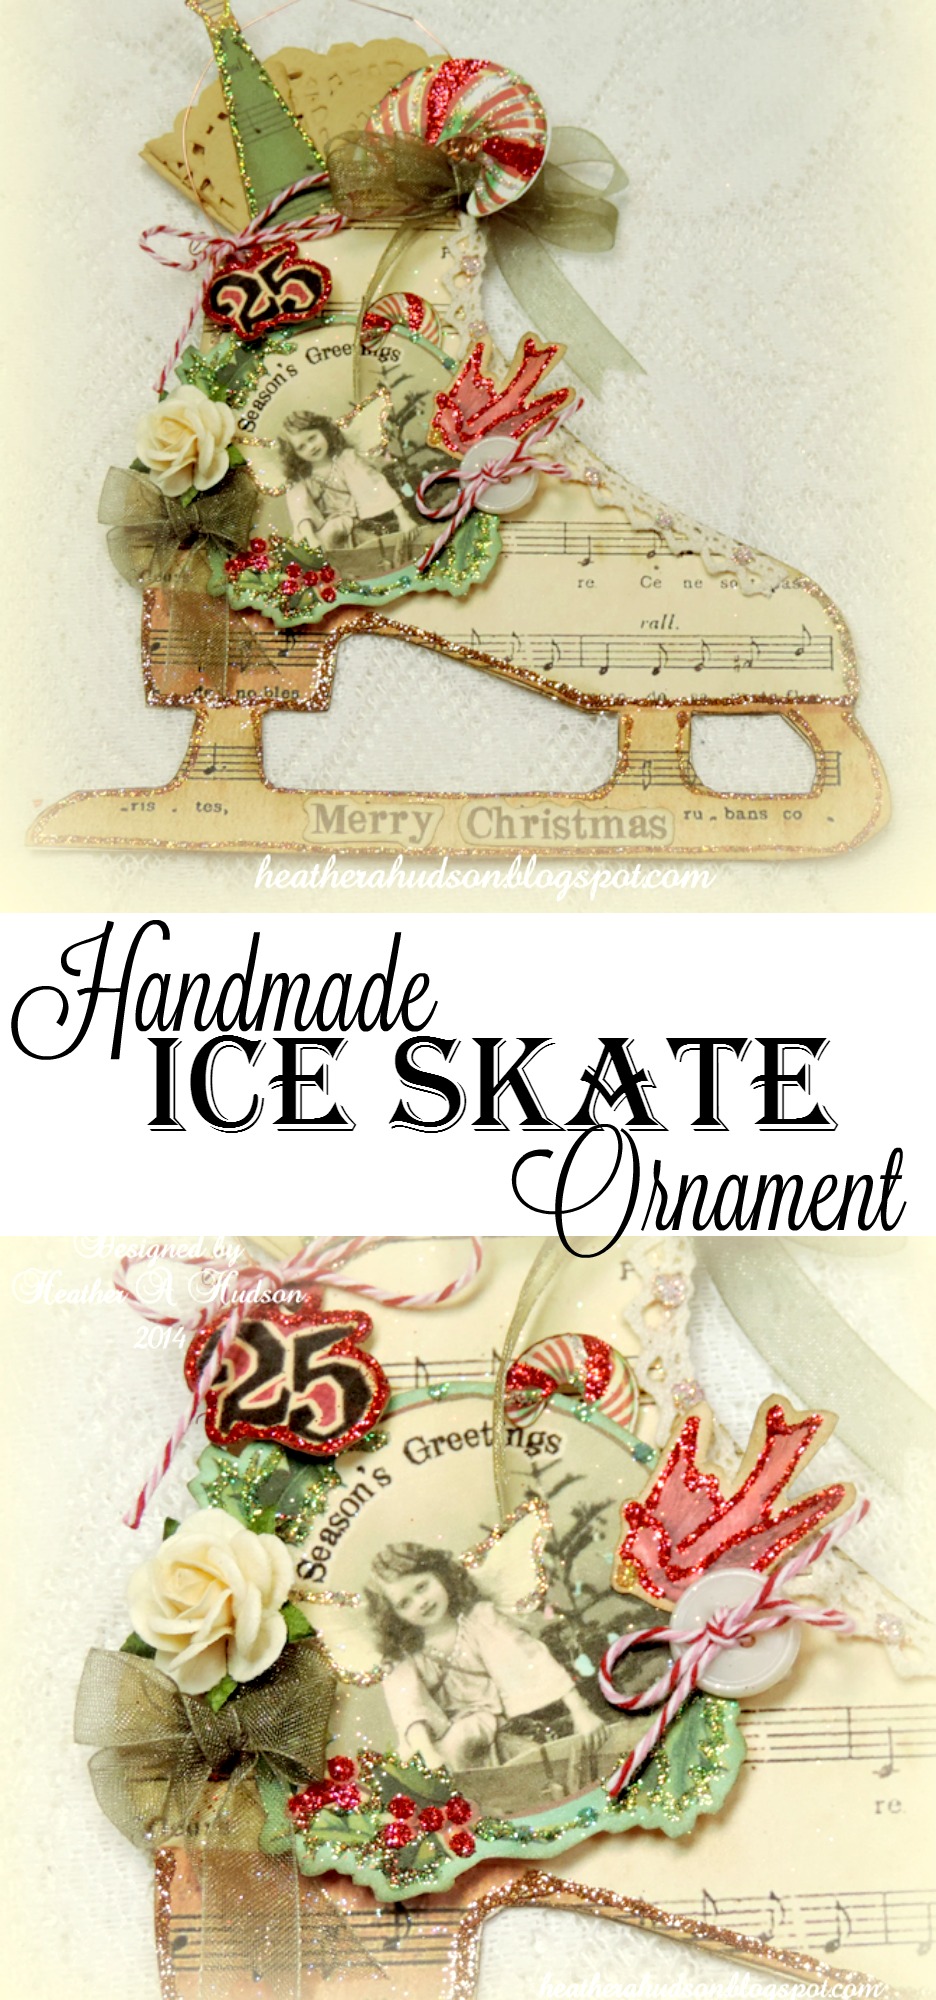 Handmade ice skate ornament